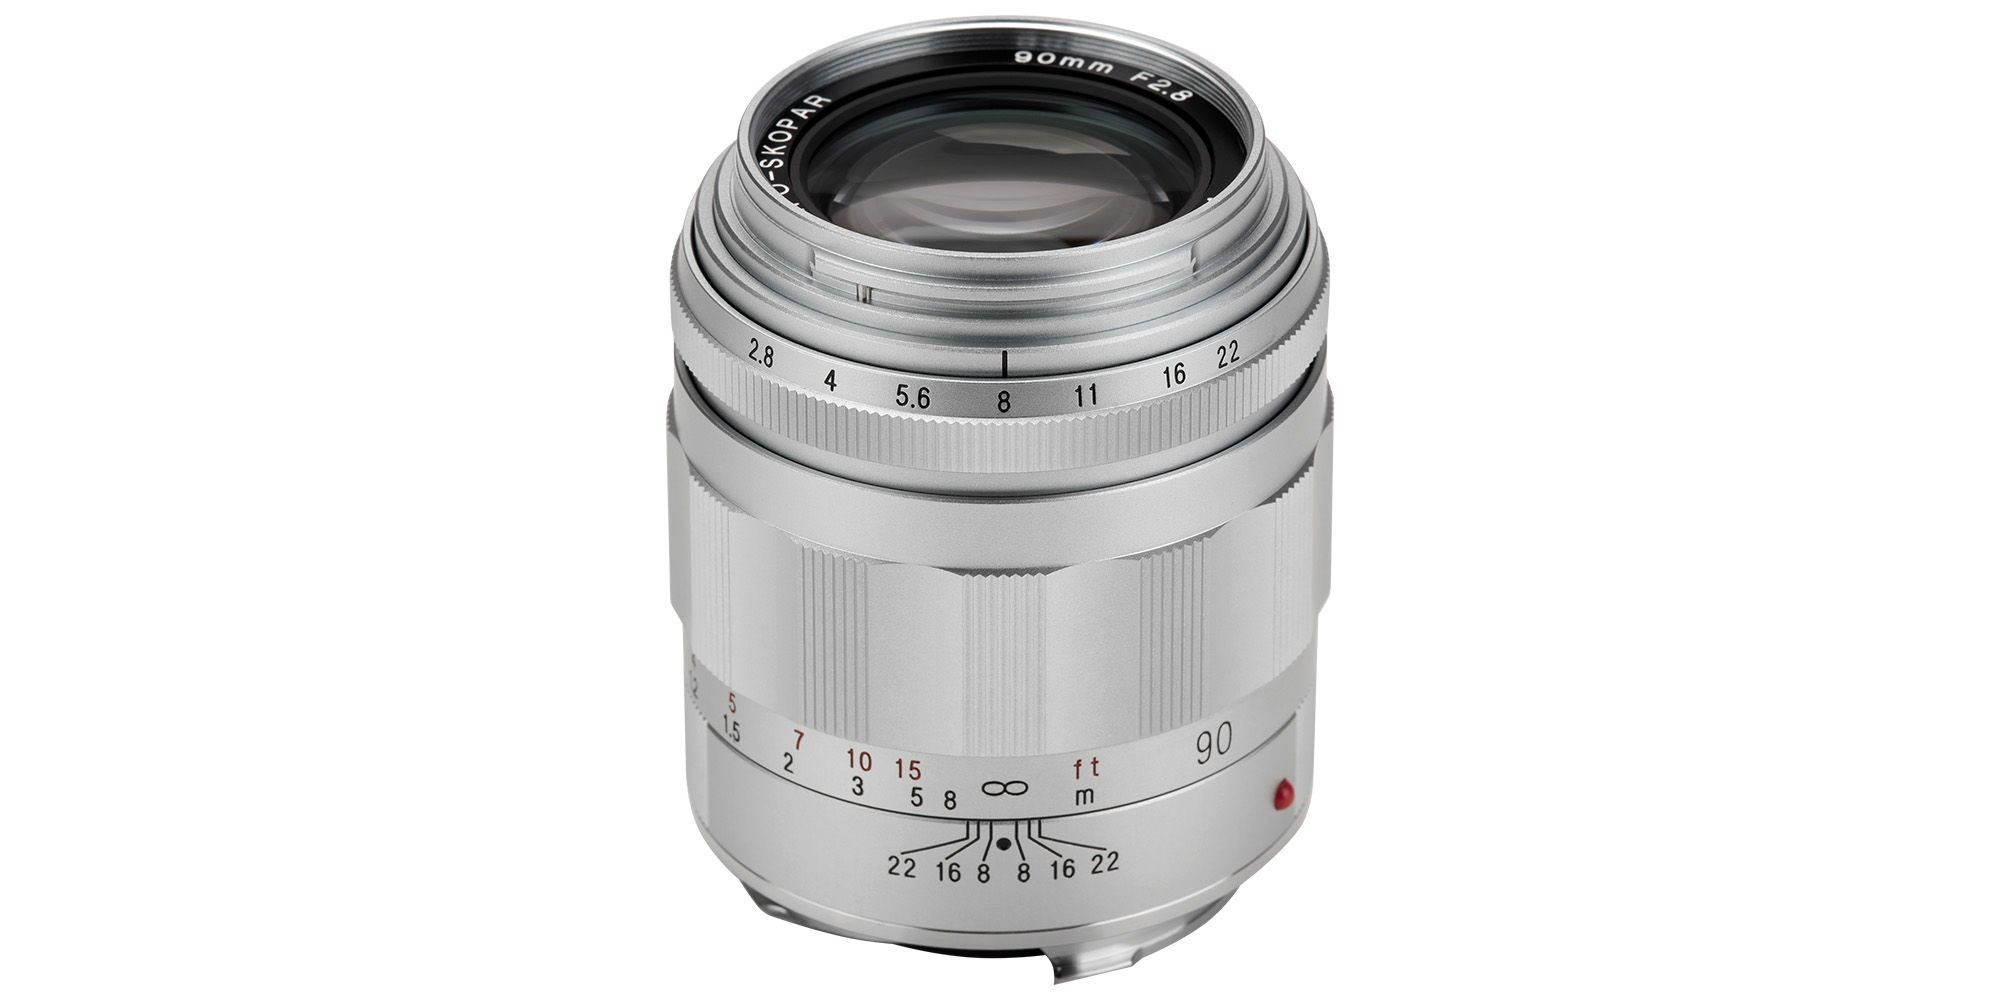 Voigtlander APO Skopar 90 mm f/2.8 for Leica M - silver - telephoto lens